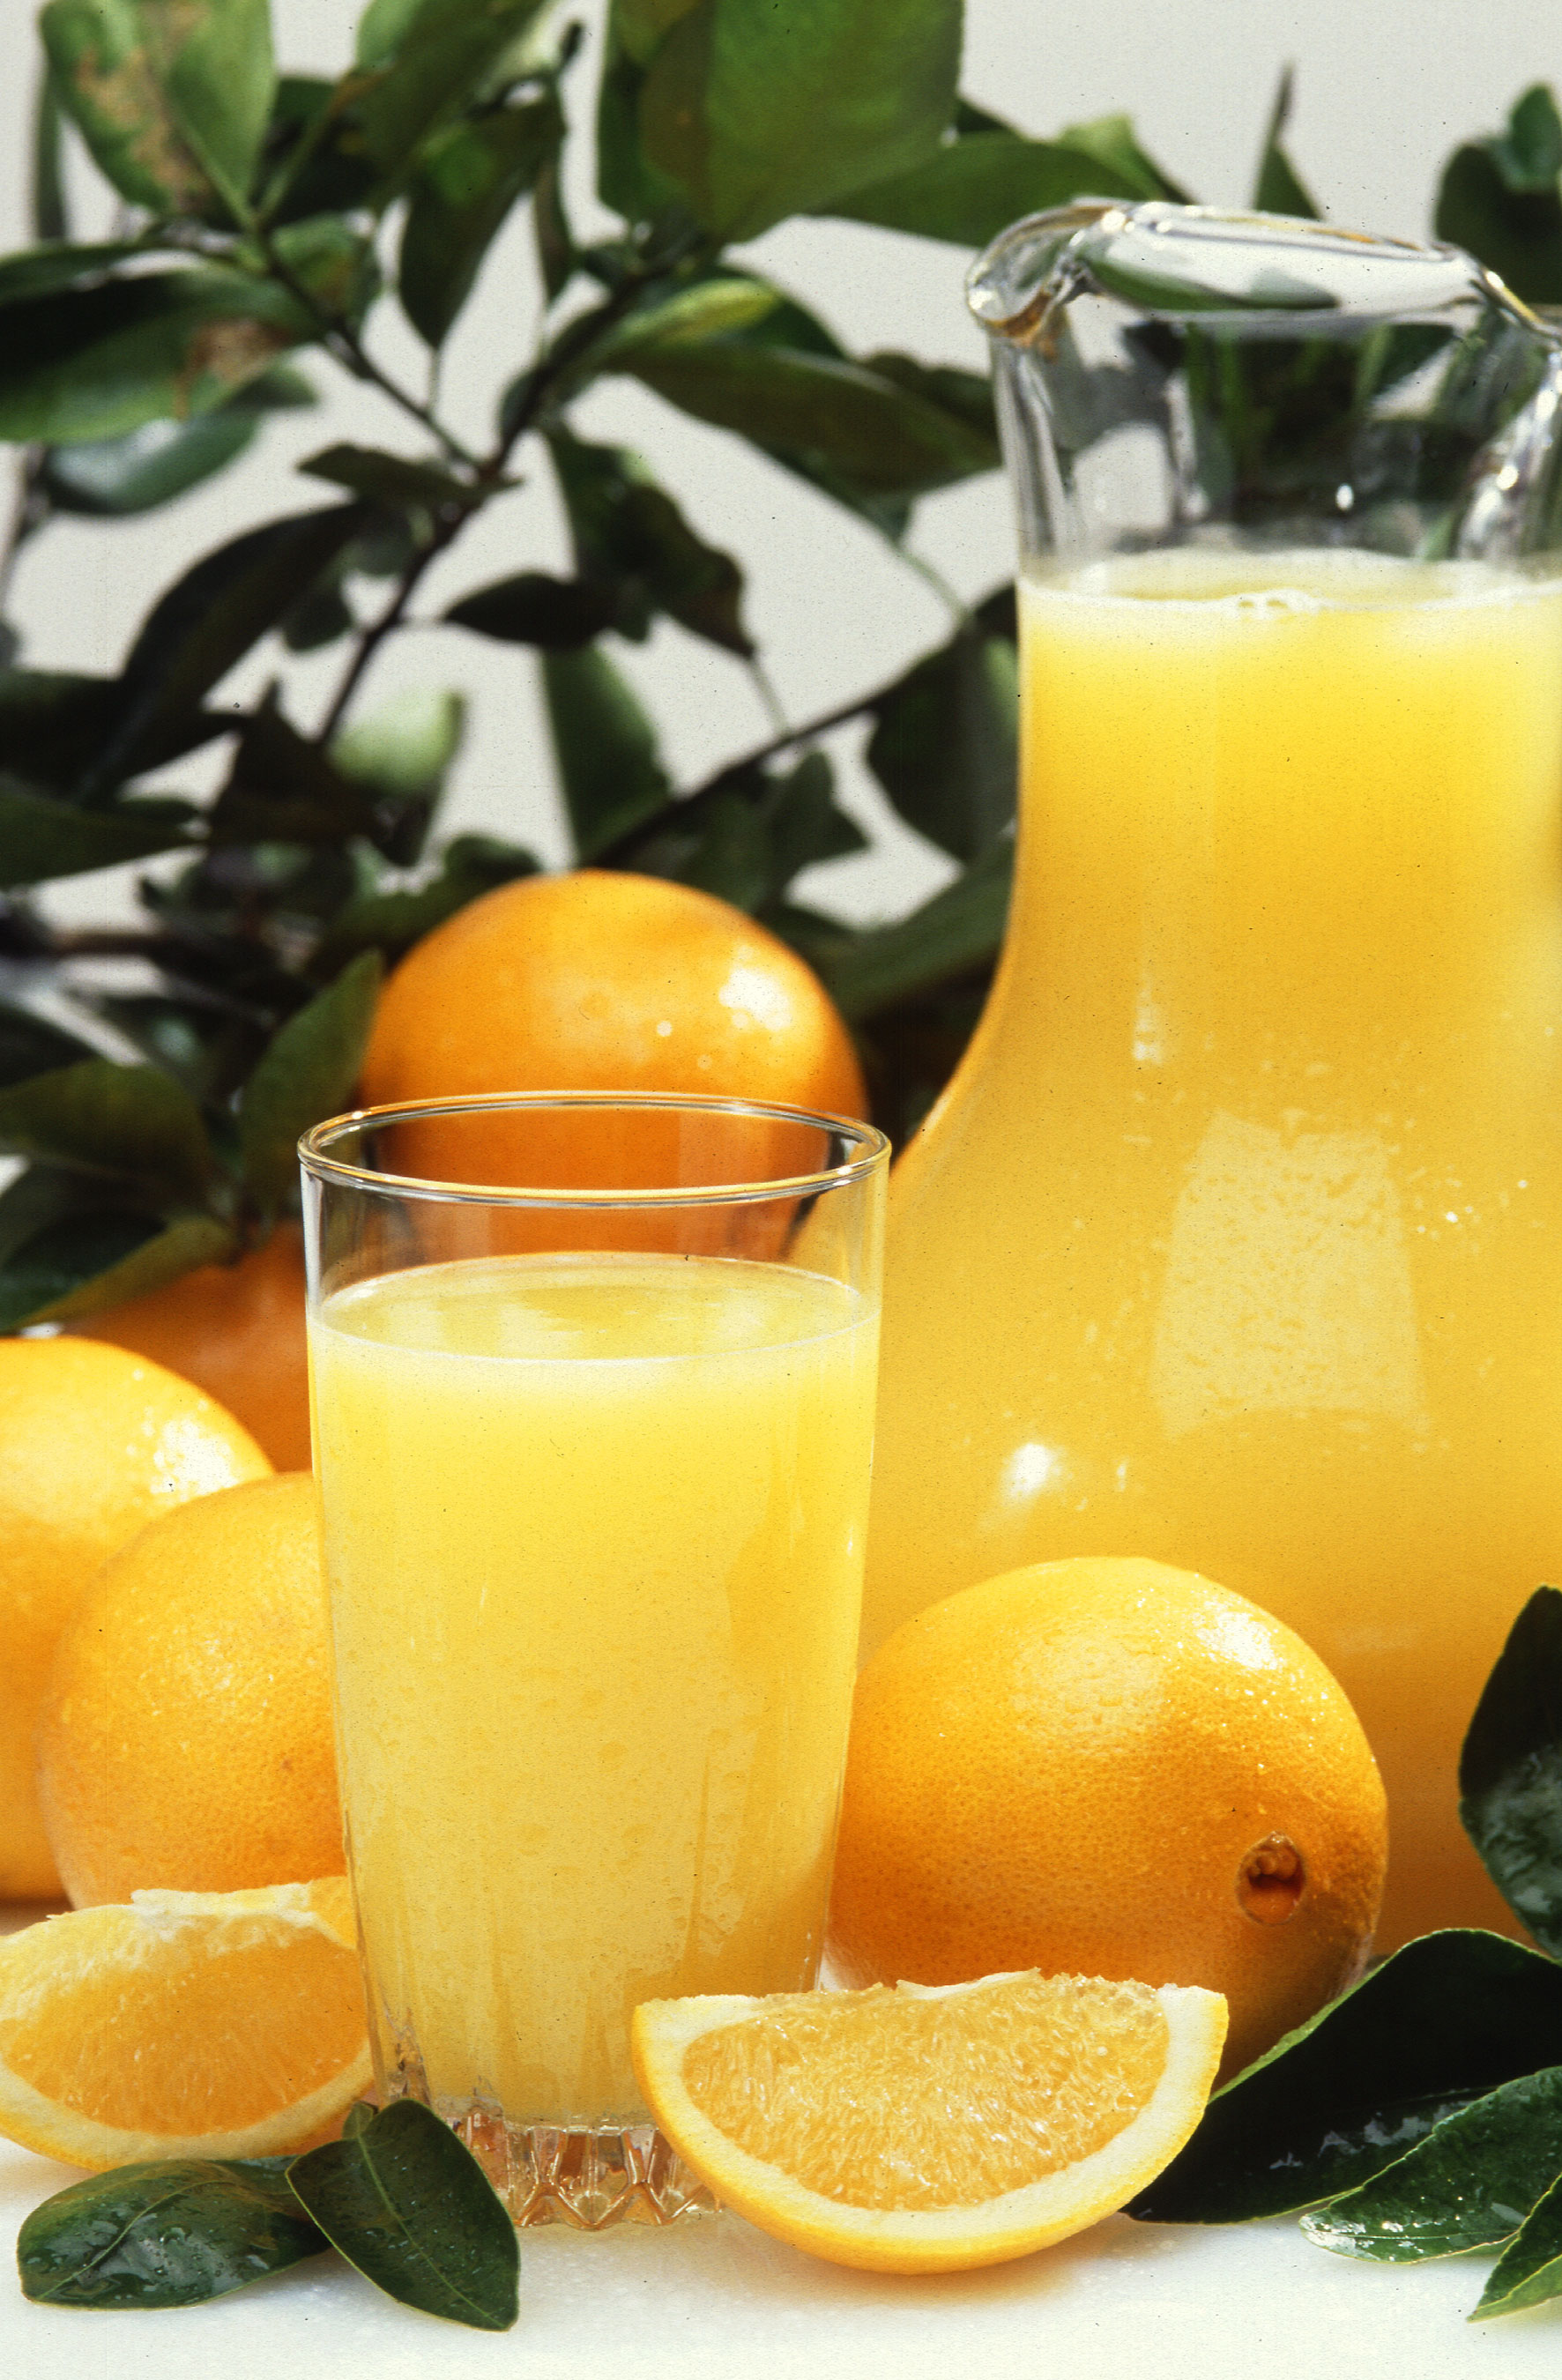 Orange juice - Wikipedia